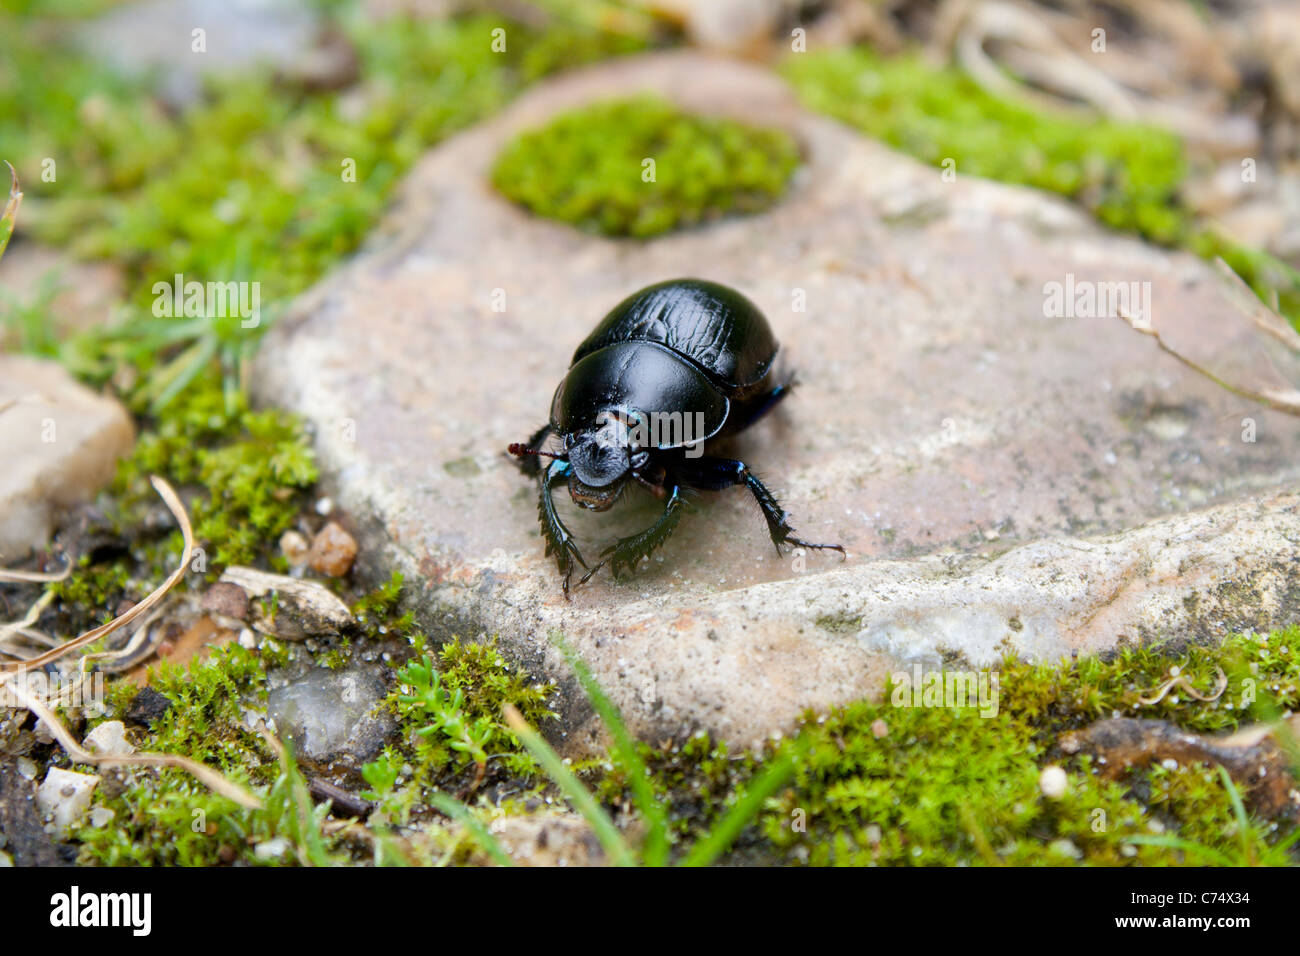 Black beetle on a stone Stock Photo